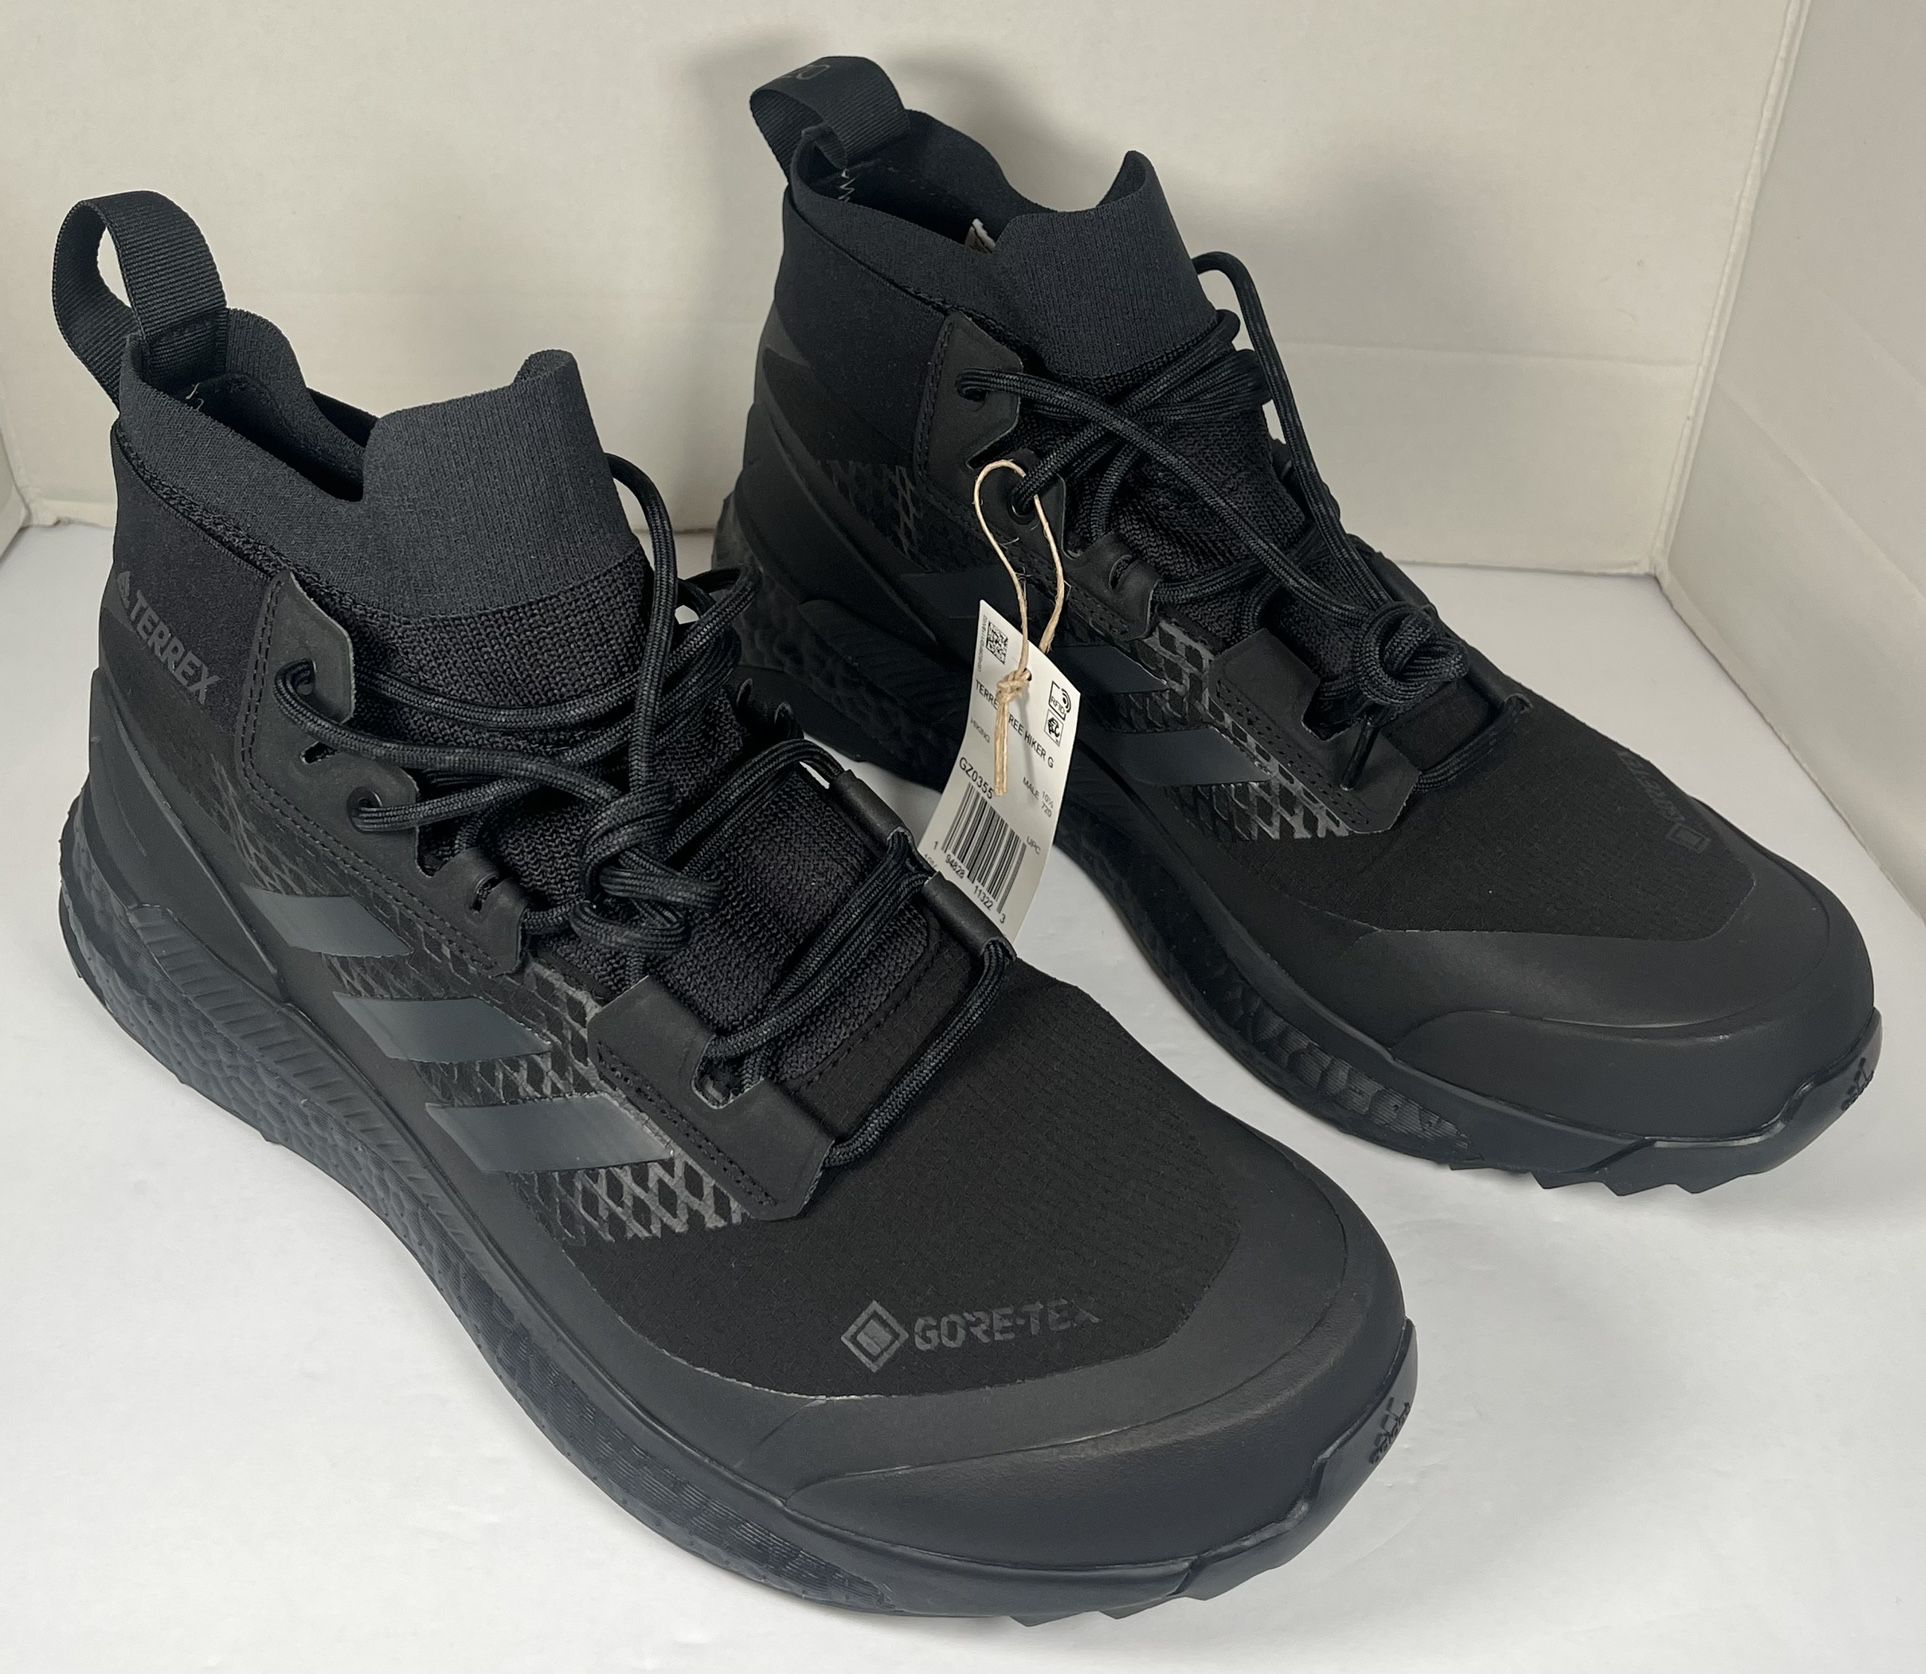 Adidas Terrex Free Hiker GTX Gore-Tex Black Trail Shoes Men’s Size 9 GZ0355 New Without Box 